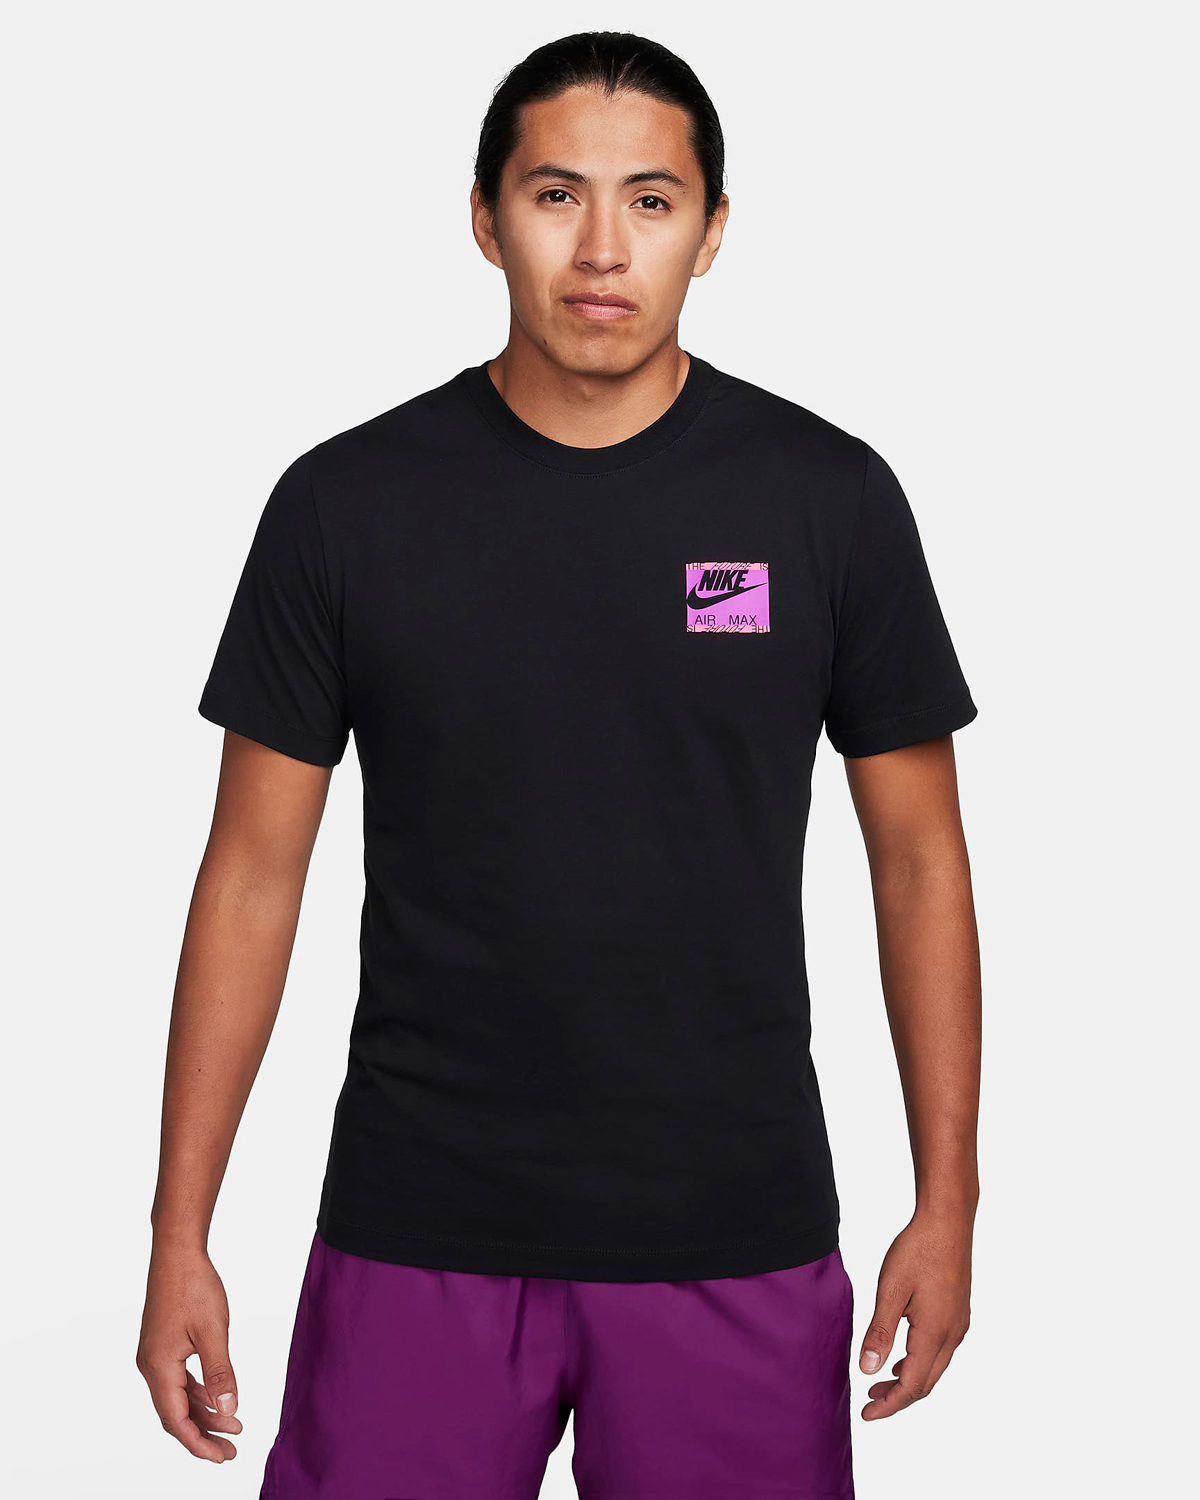 Nike Sportswear Air Max T Shirt Black Purple 1